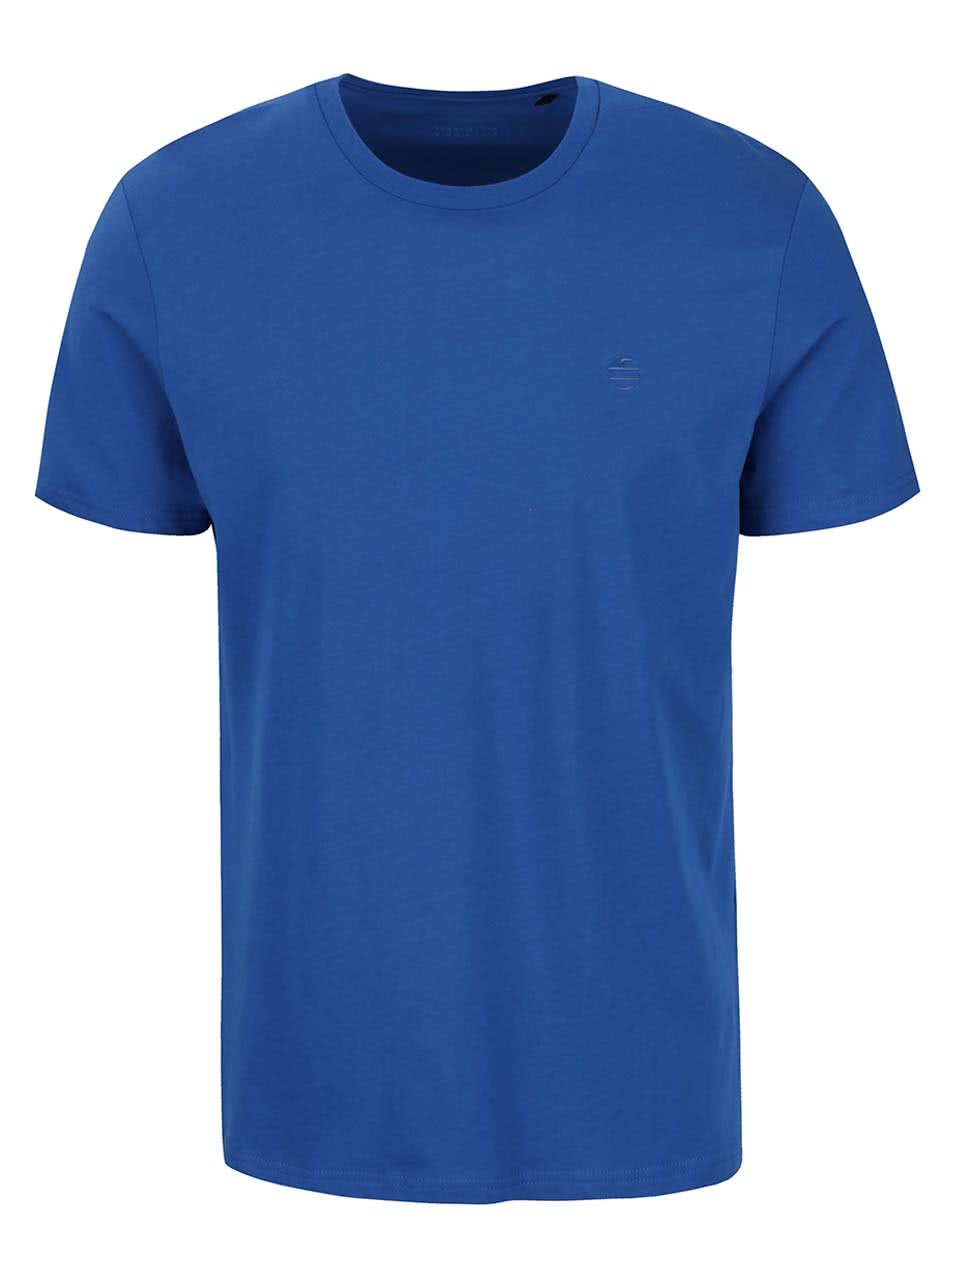 Modré pánské triko s potiskem Perry Ellis Tour